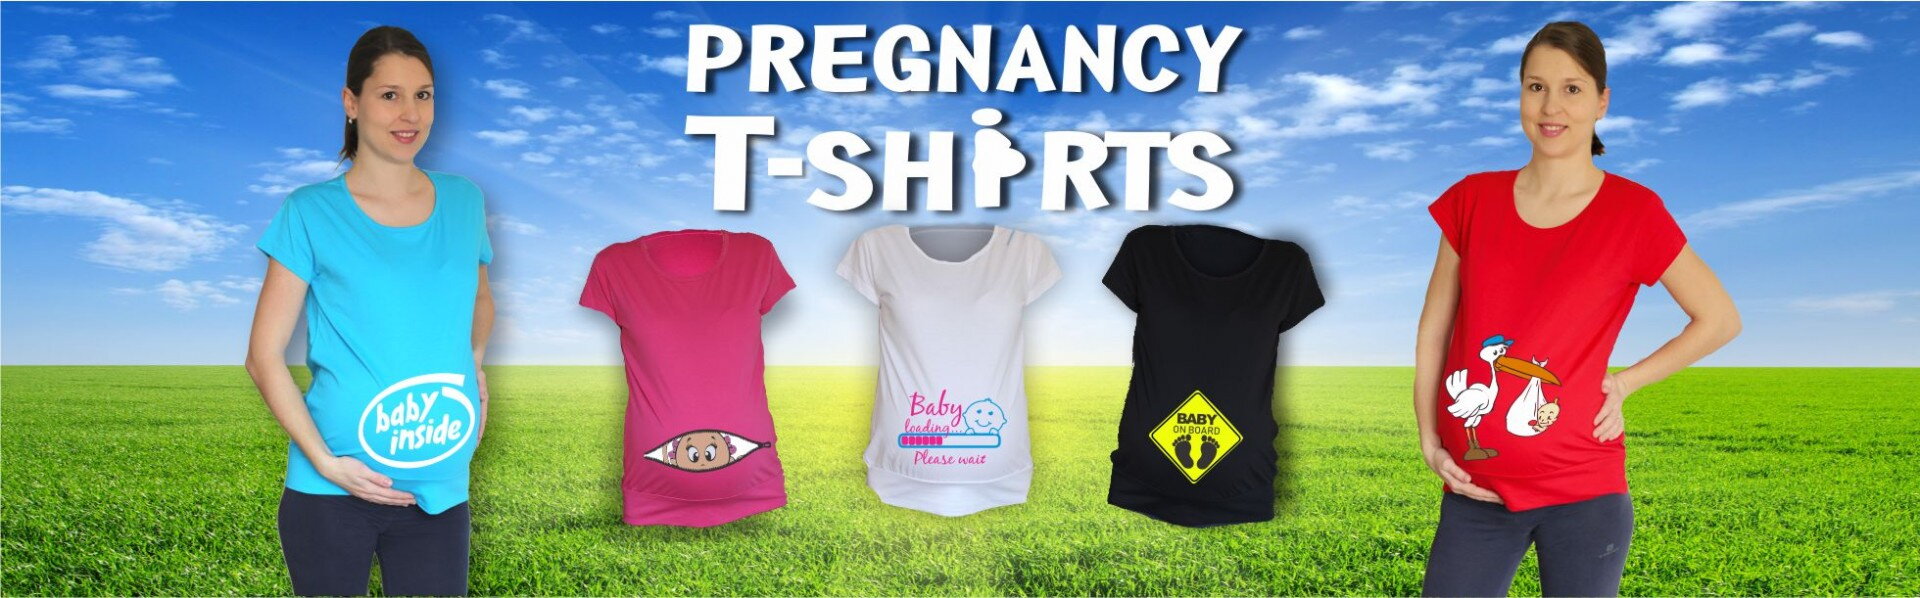 Pregnancy t-shirts